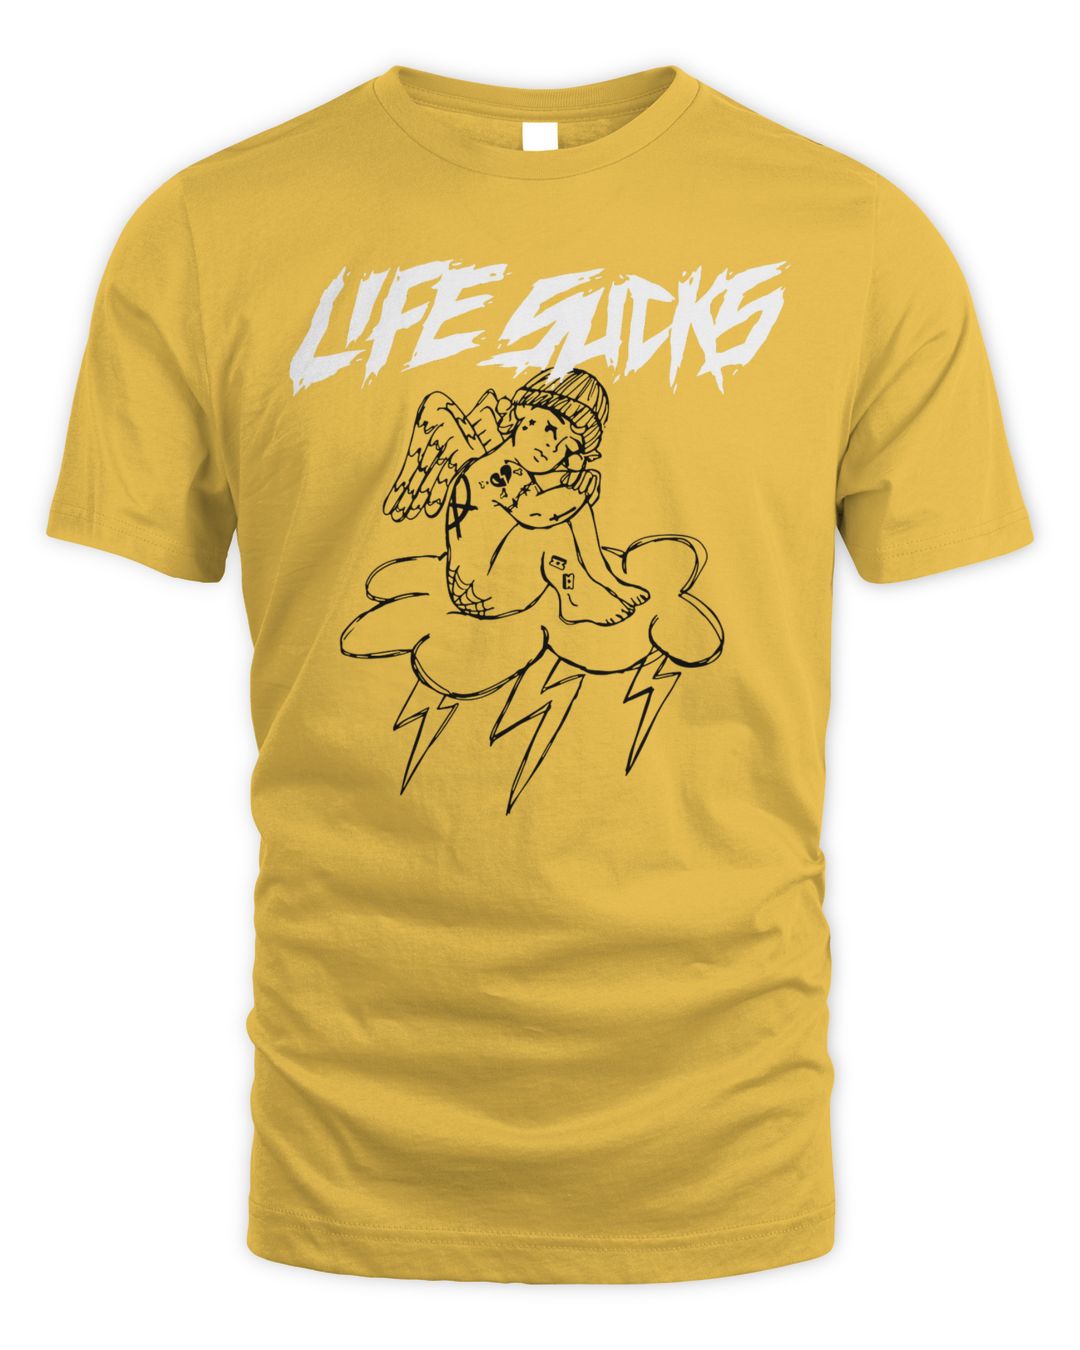 Lil Xan Merch Life Sucks Shirt UVE